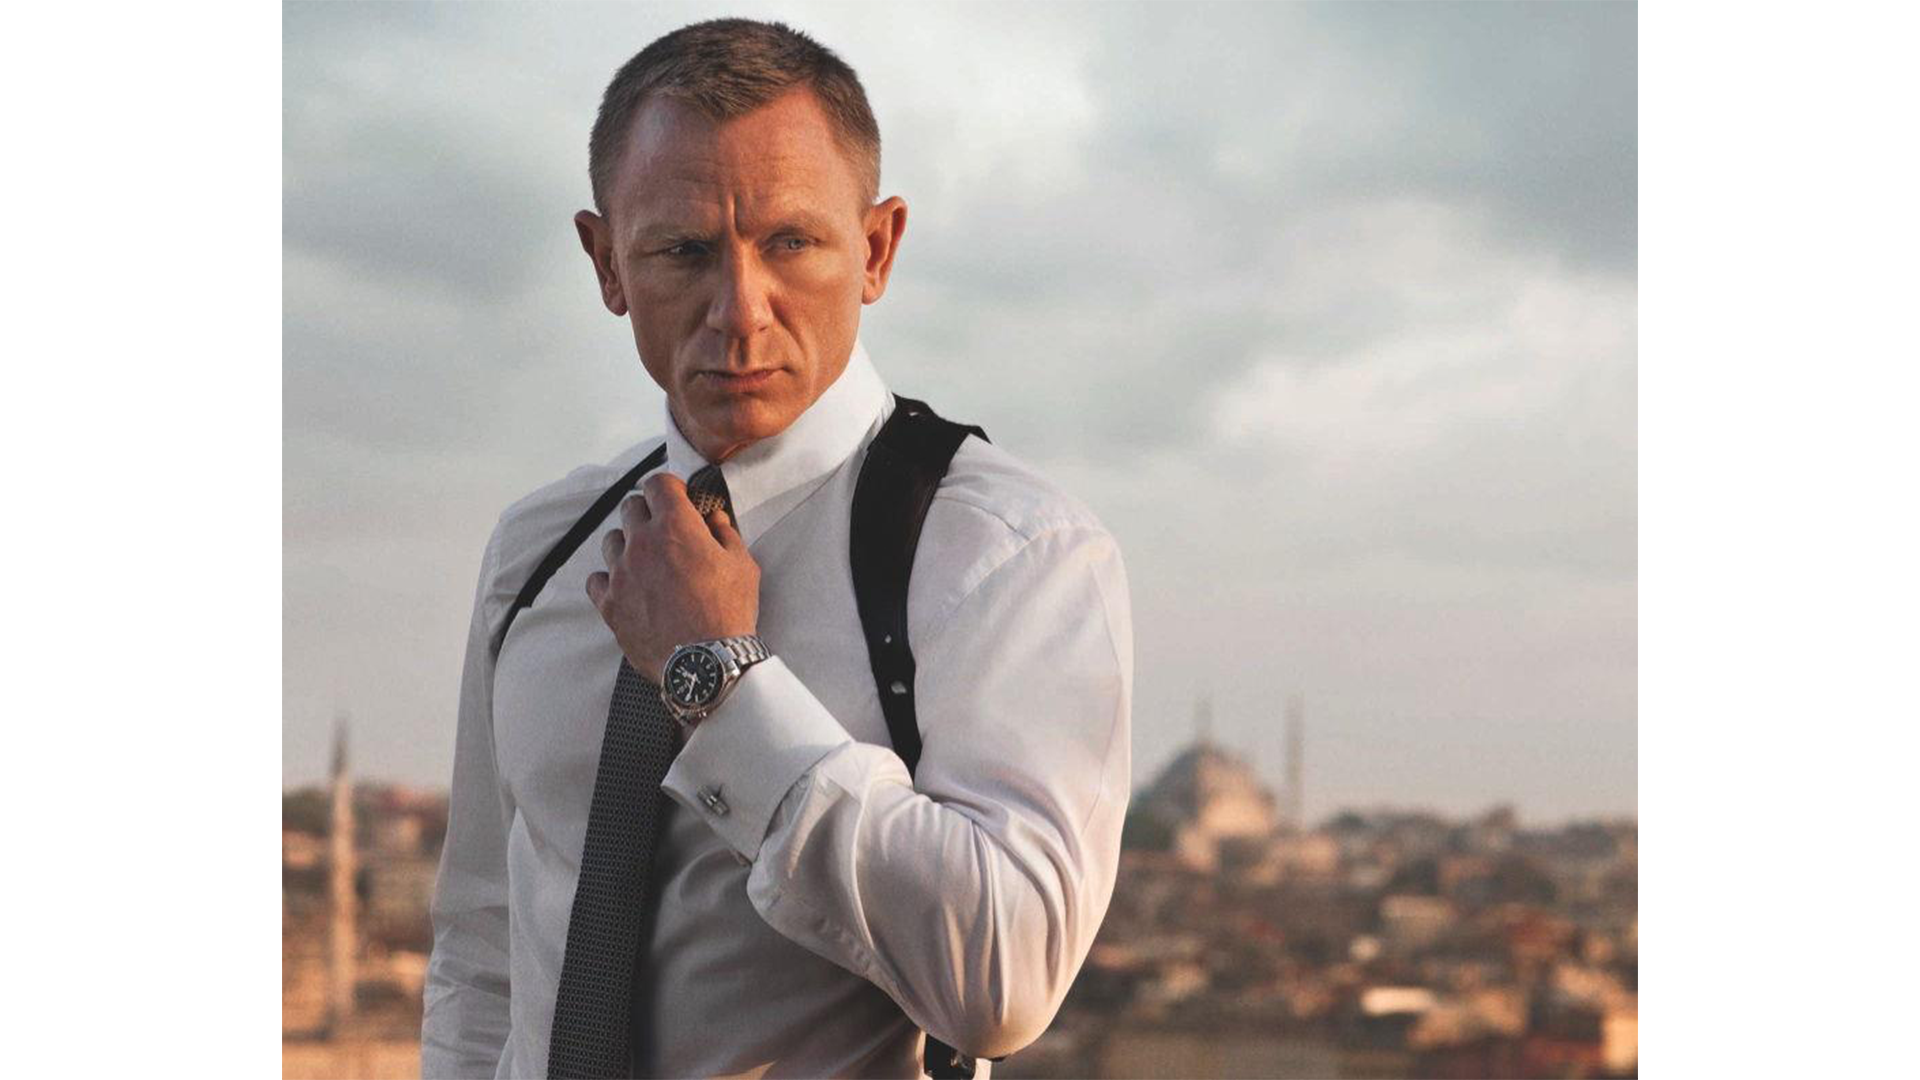 Actor Daniel Craig as James Bond in Skyfall, wearing cufflinks.